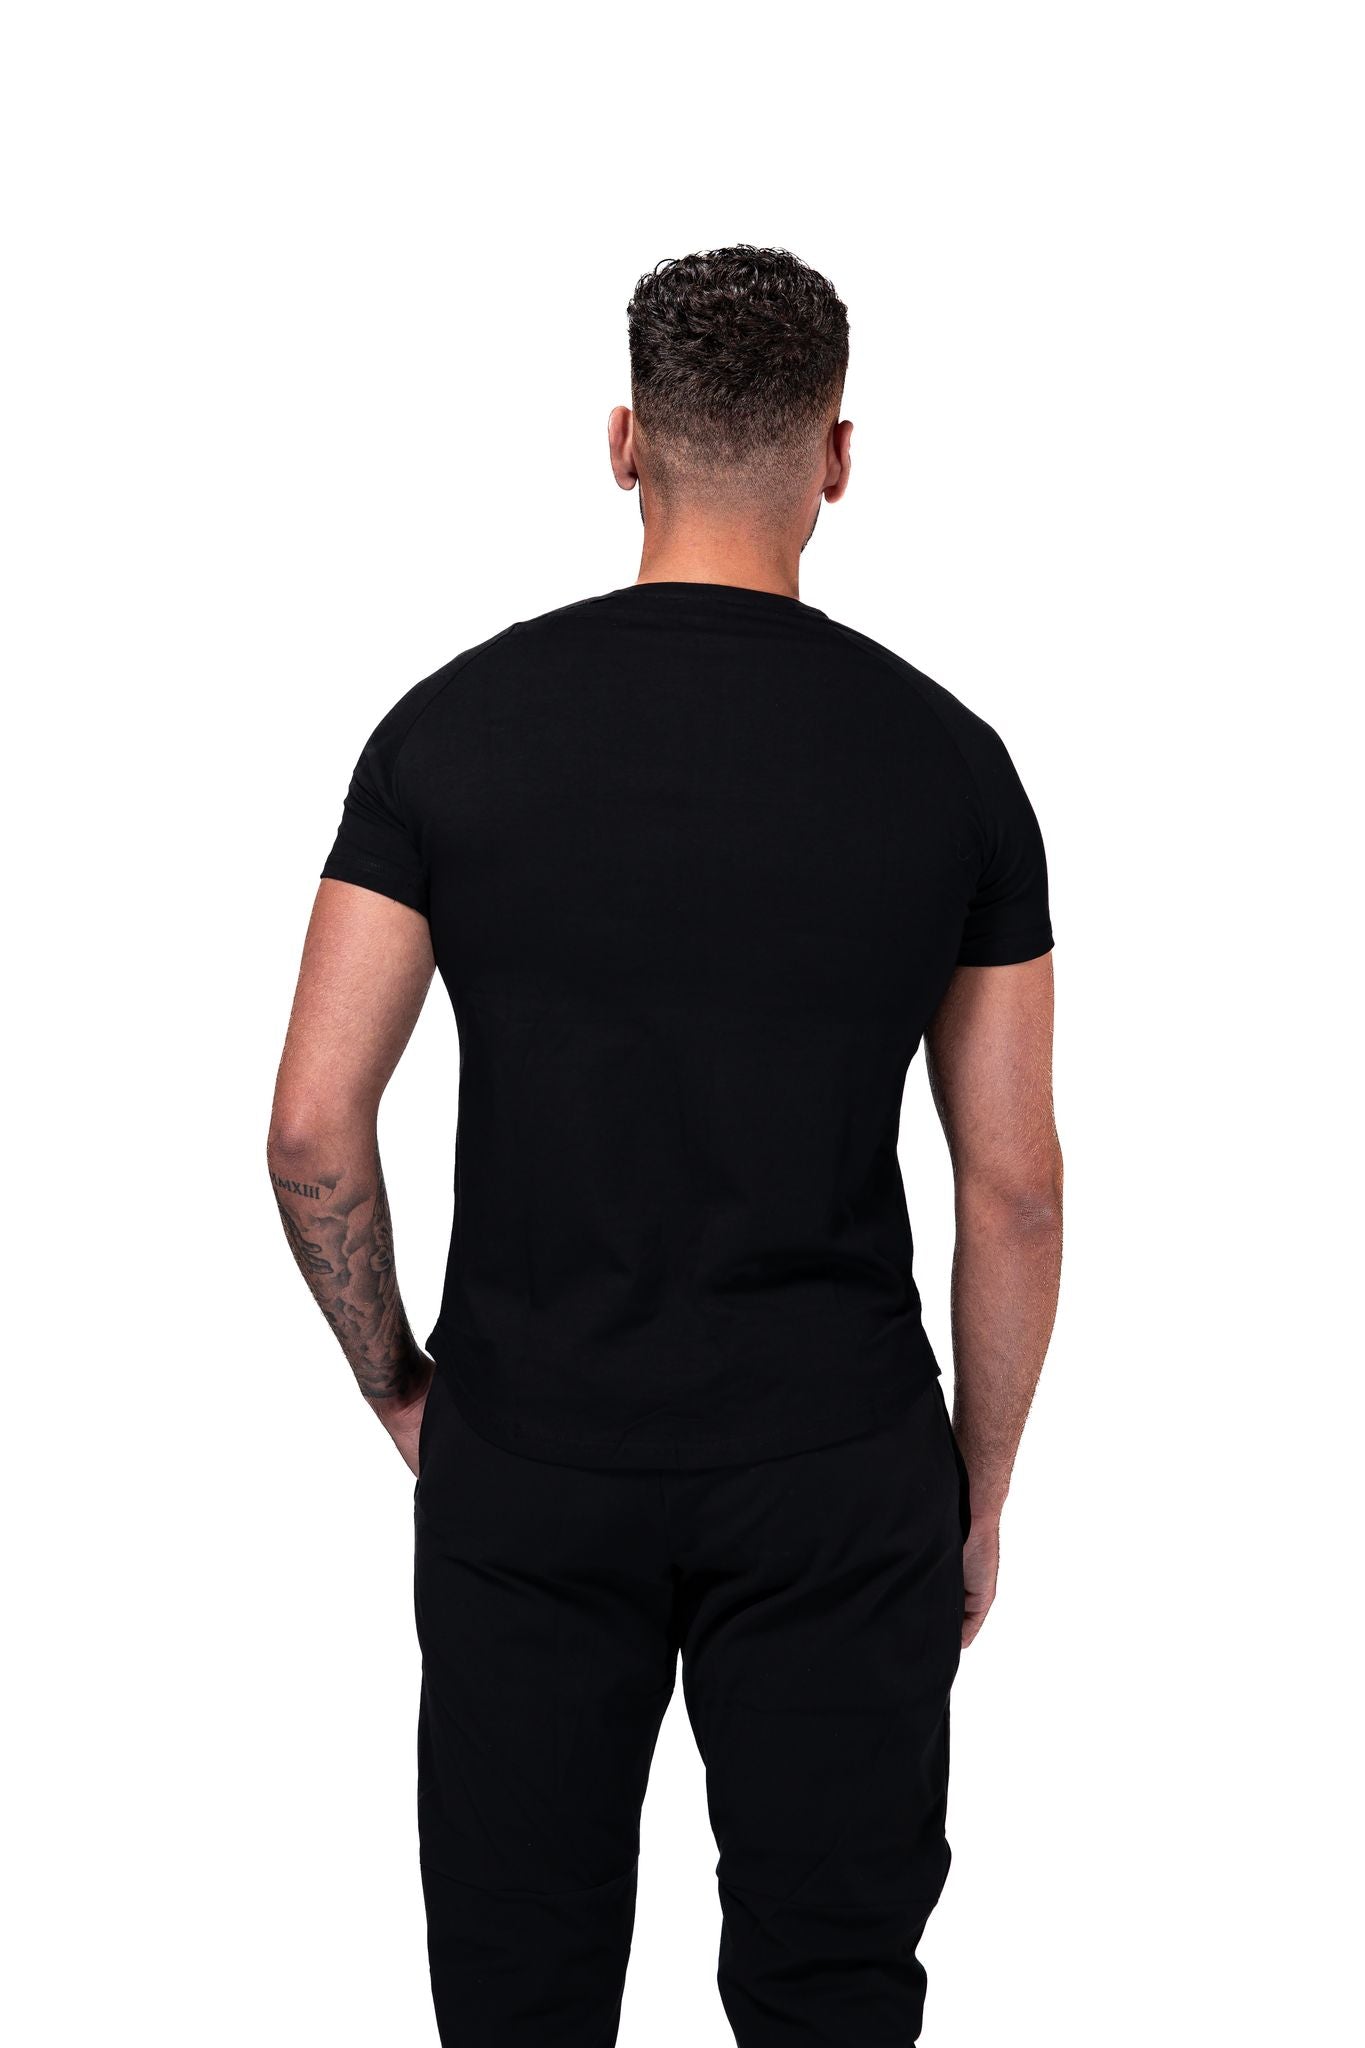 The Signature Curved Slim Black T-shirt